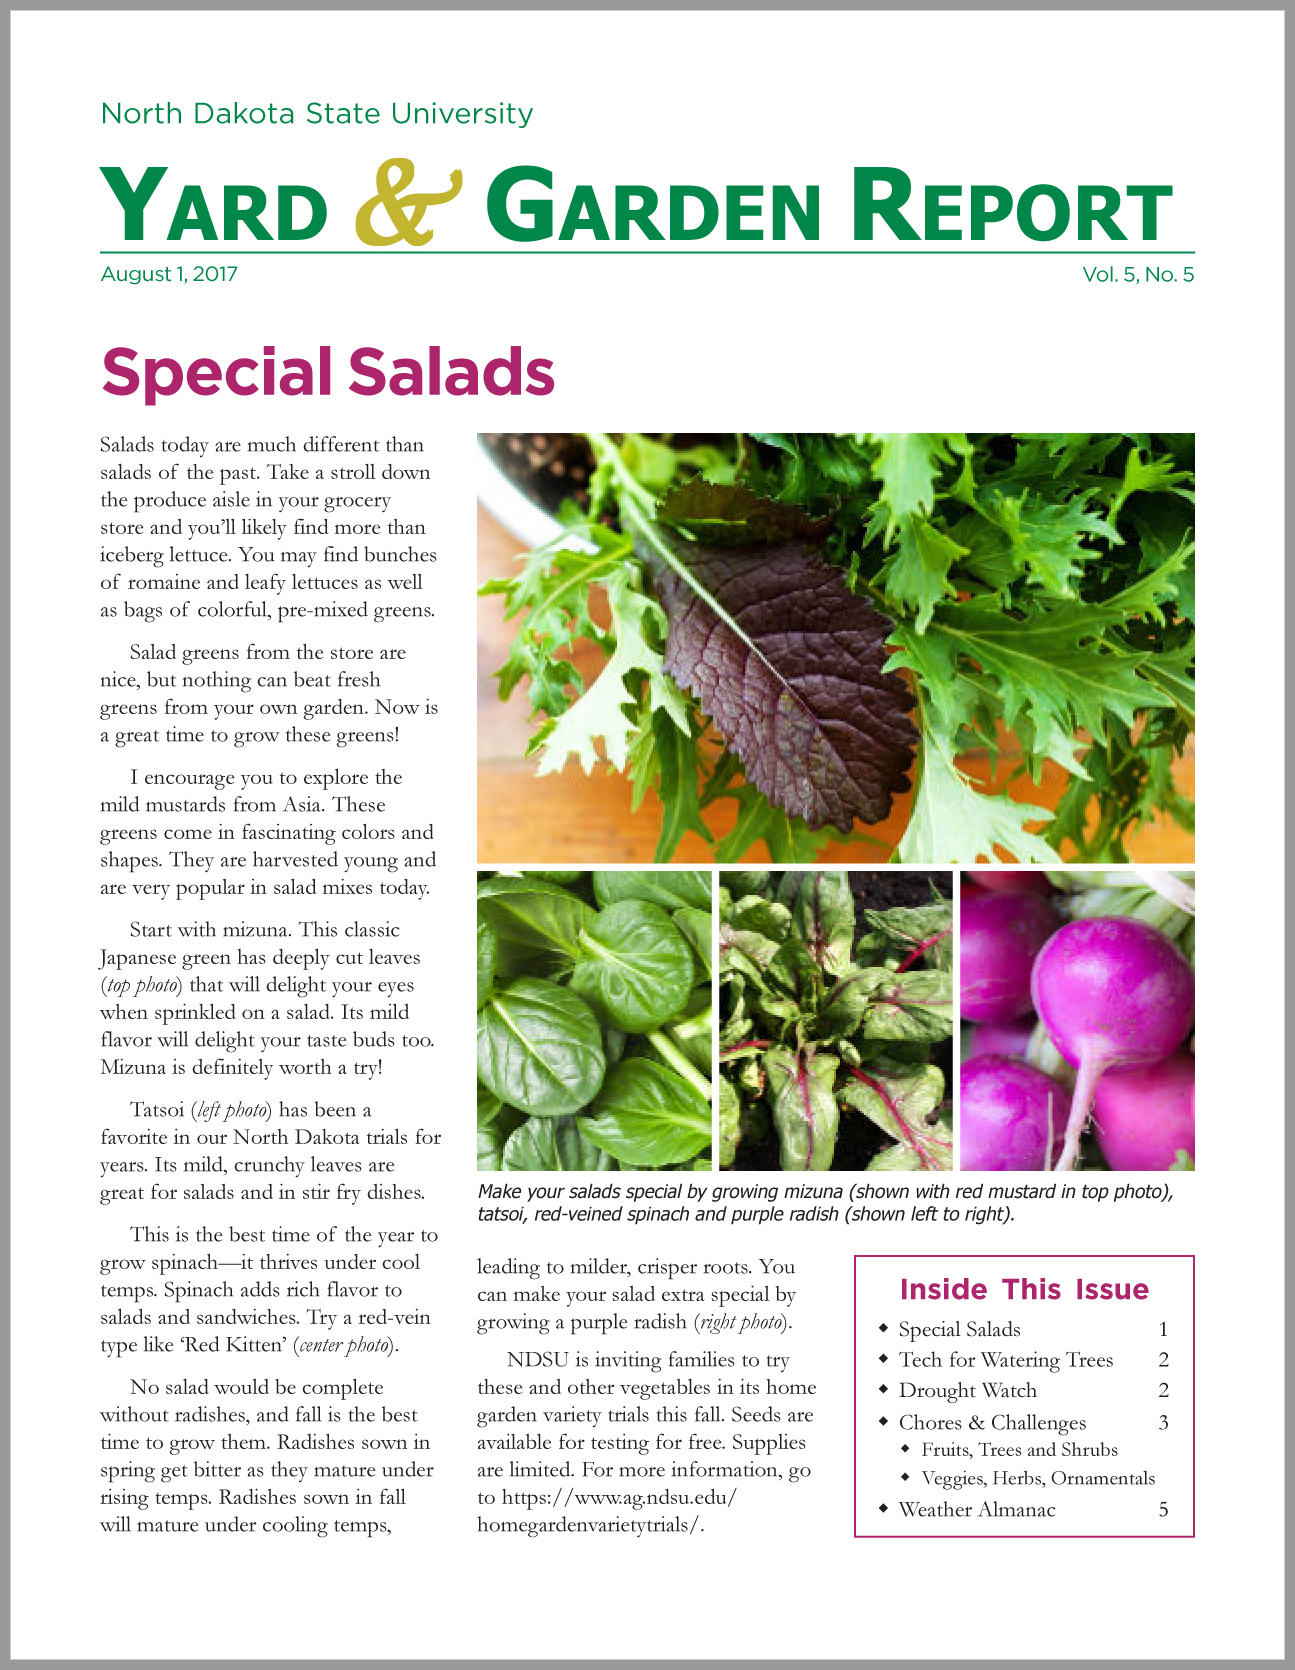 NDSU Yard & Garden Report for August 1, 2017